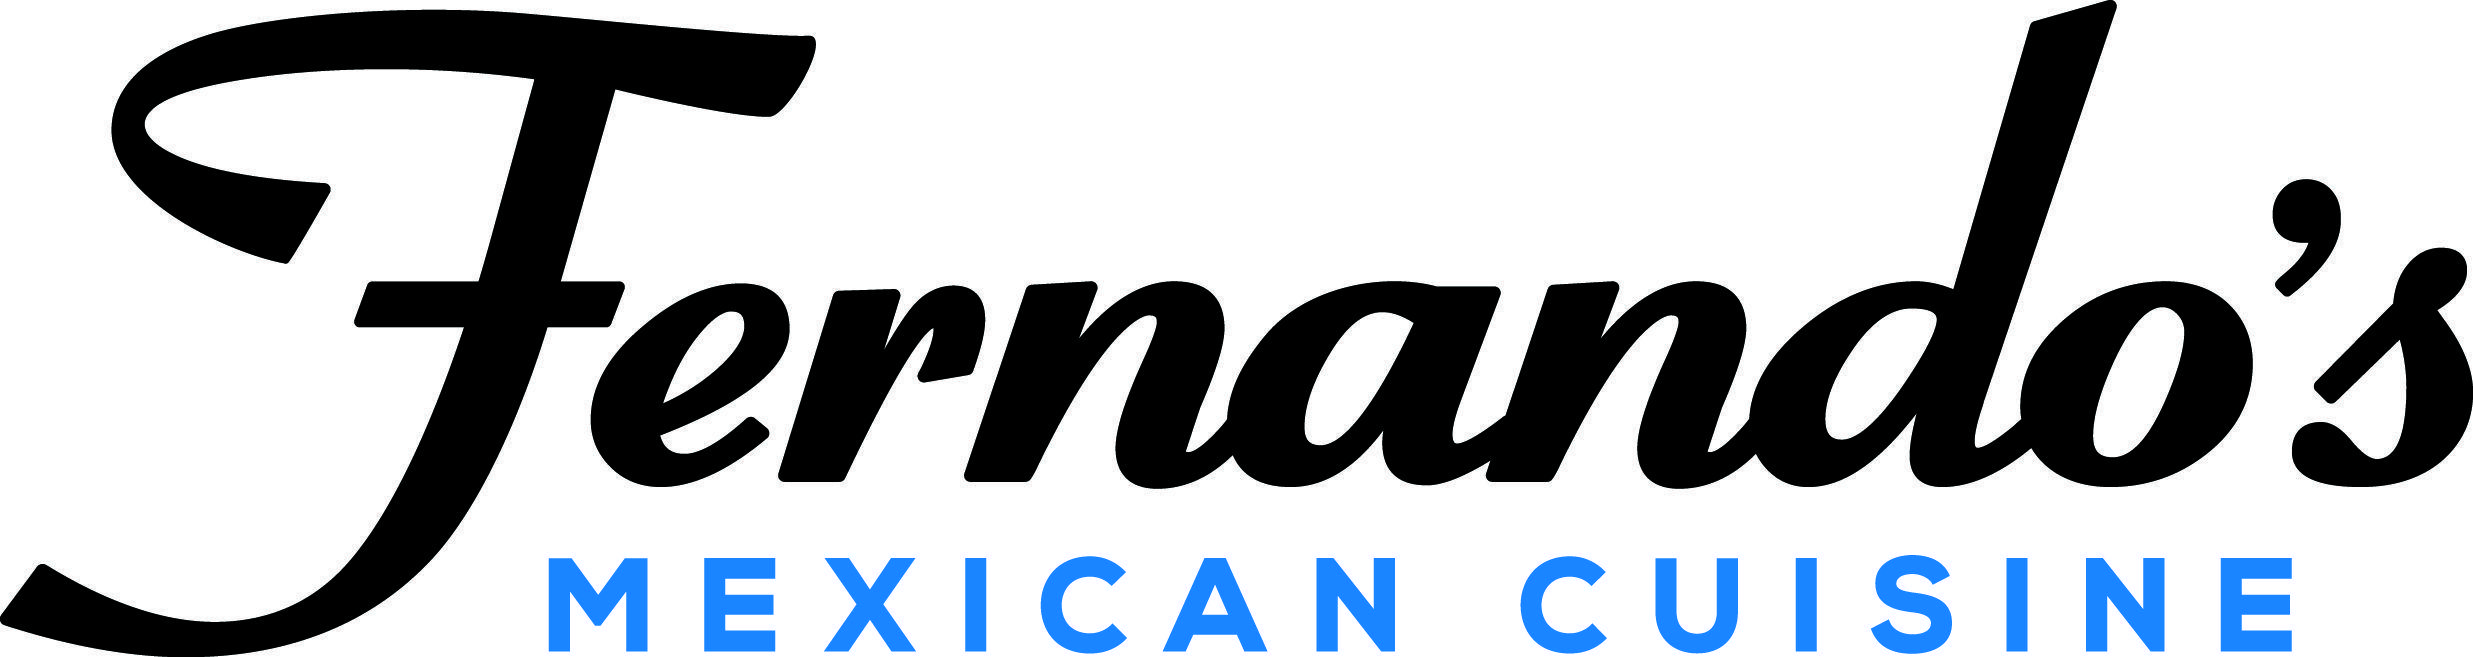 Mexican Company Logo - Fernando's Mexican Cuisine Company Logo